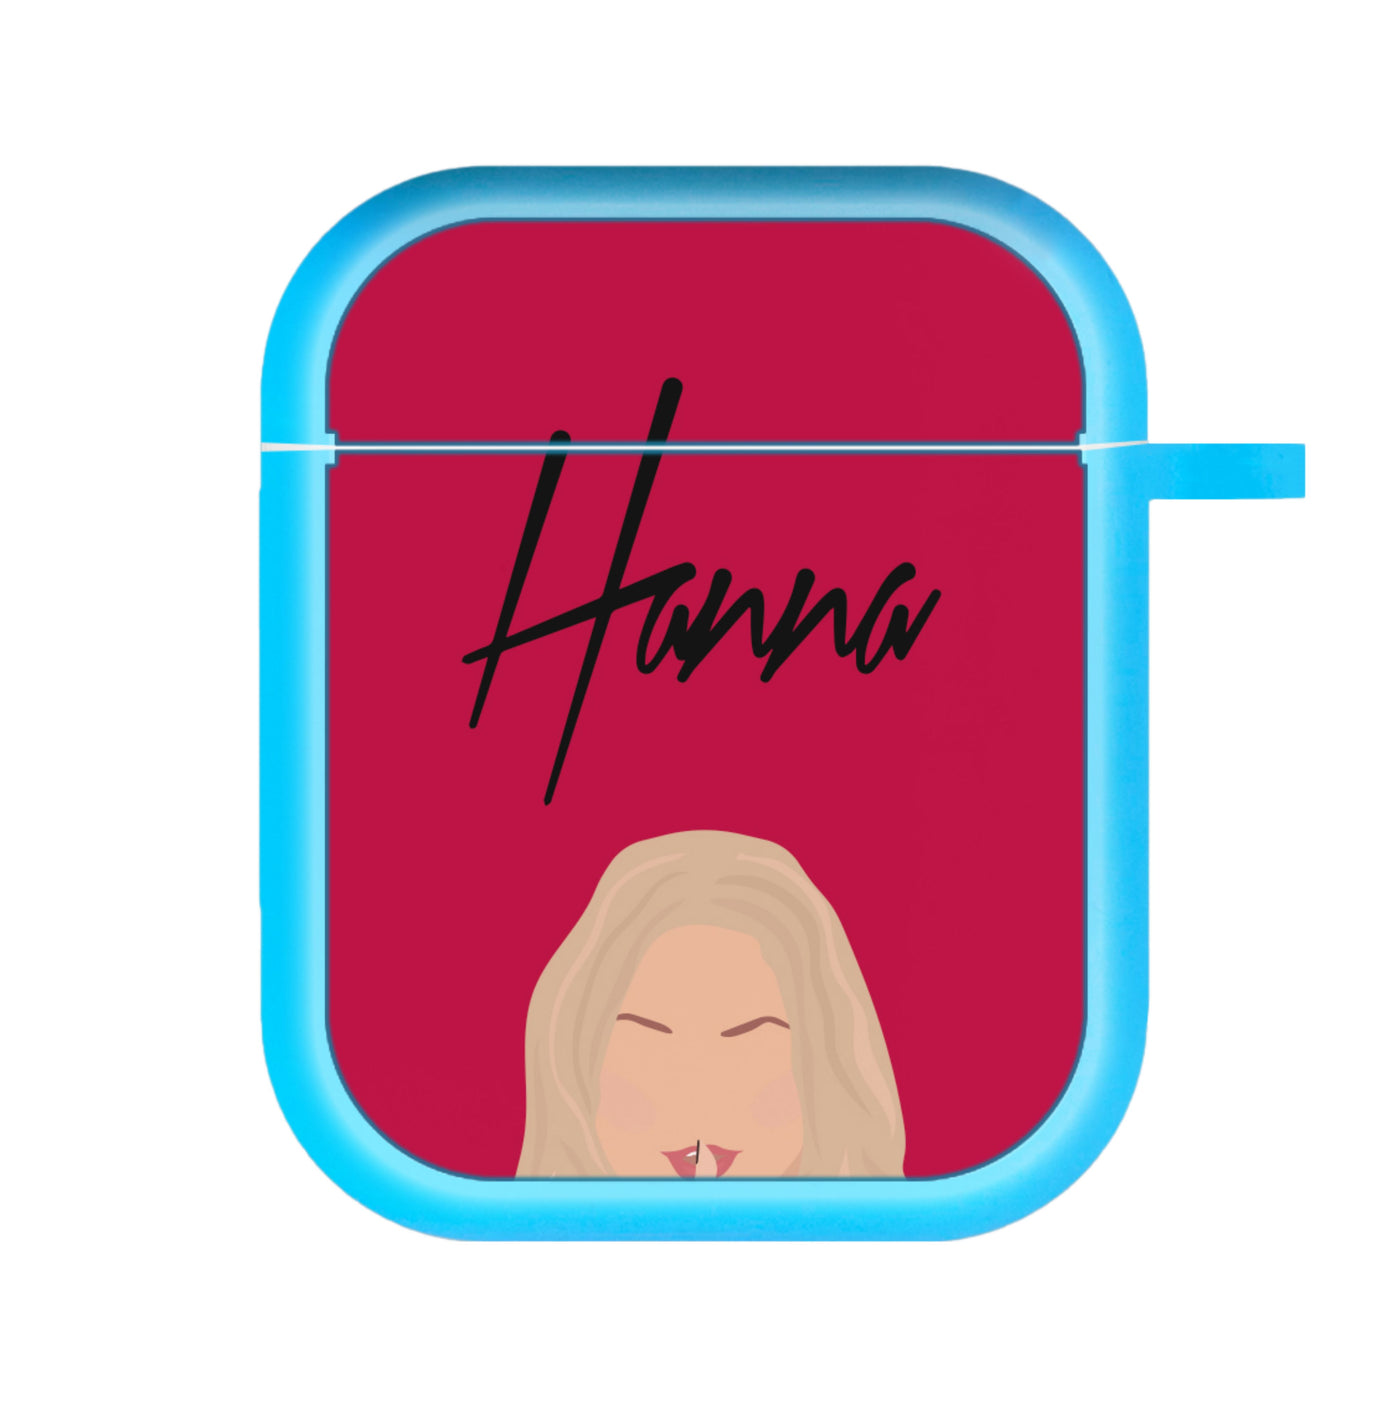 Hanna - Pretty Little Liars AirPods Case